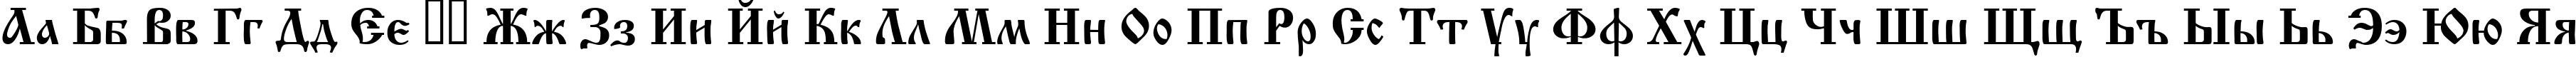 Пример написания русского алфавита шрифтом OldStyle